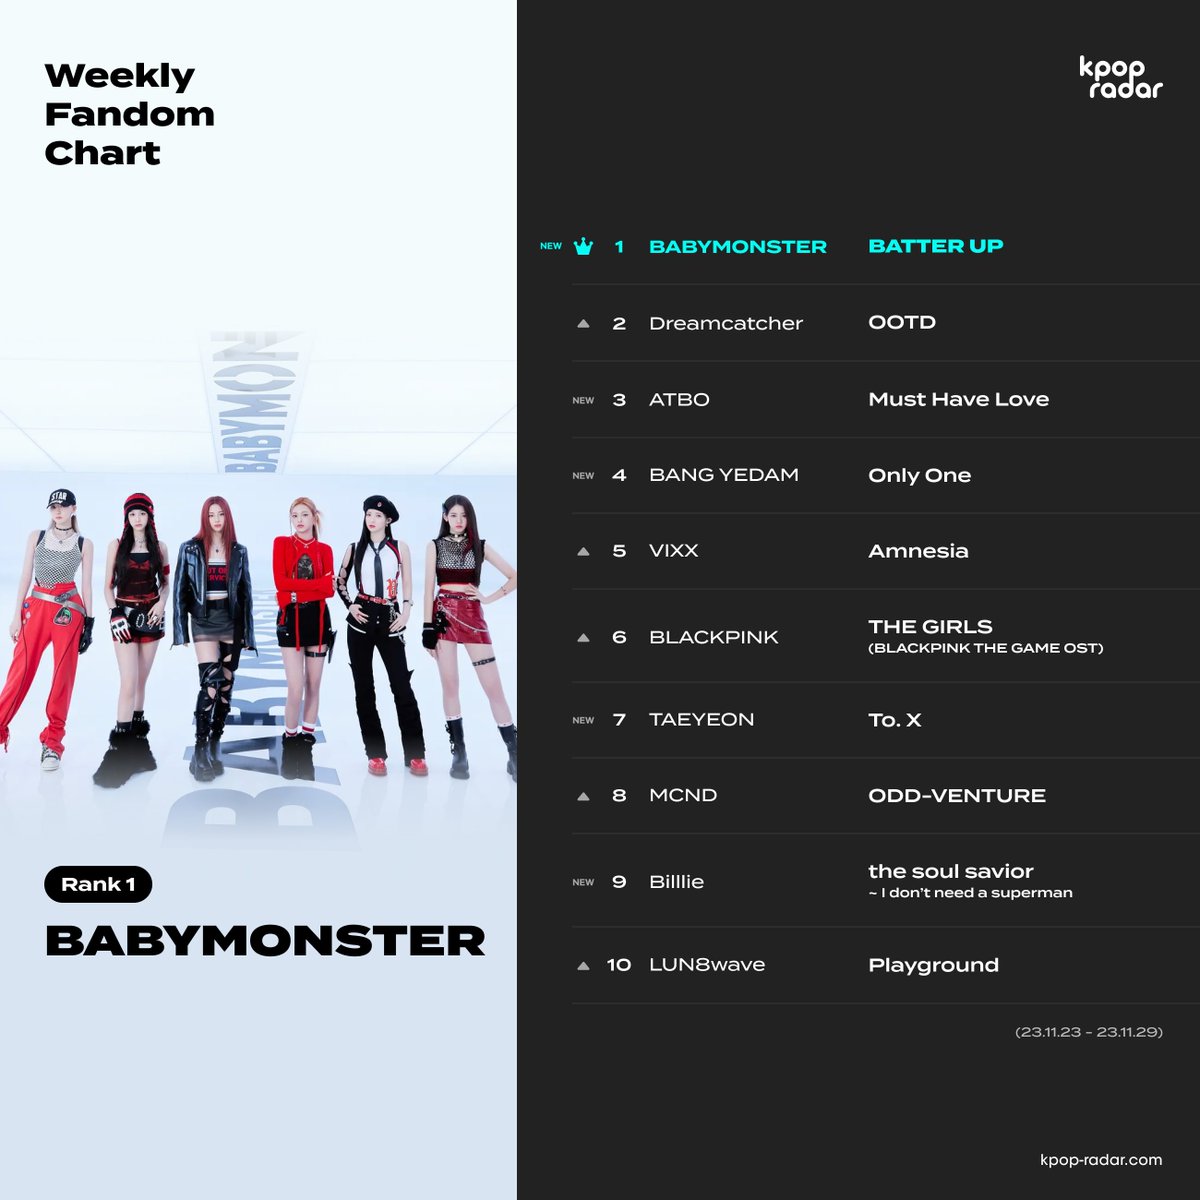 📡K-POP RADAR Weekly Fandom Chart Which artist had the biggest increase in fandom this week? 🥇#BABYMONSTER - #BATTER_UP 🥈#Dreamcatcher - #OOTD 🥉#ATBO - #MustHaveLove #kpopradar #weeklyfandomchart #kpop